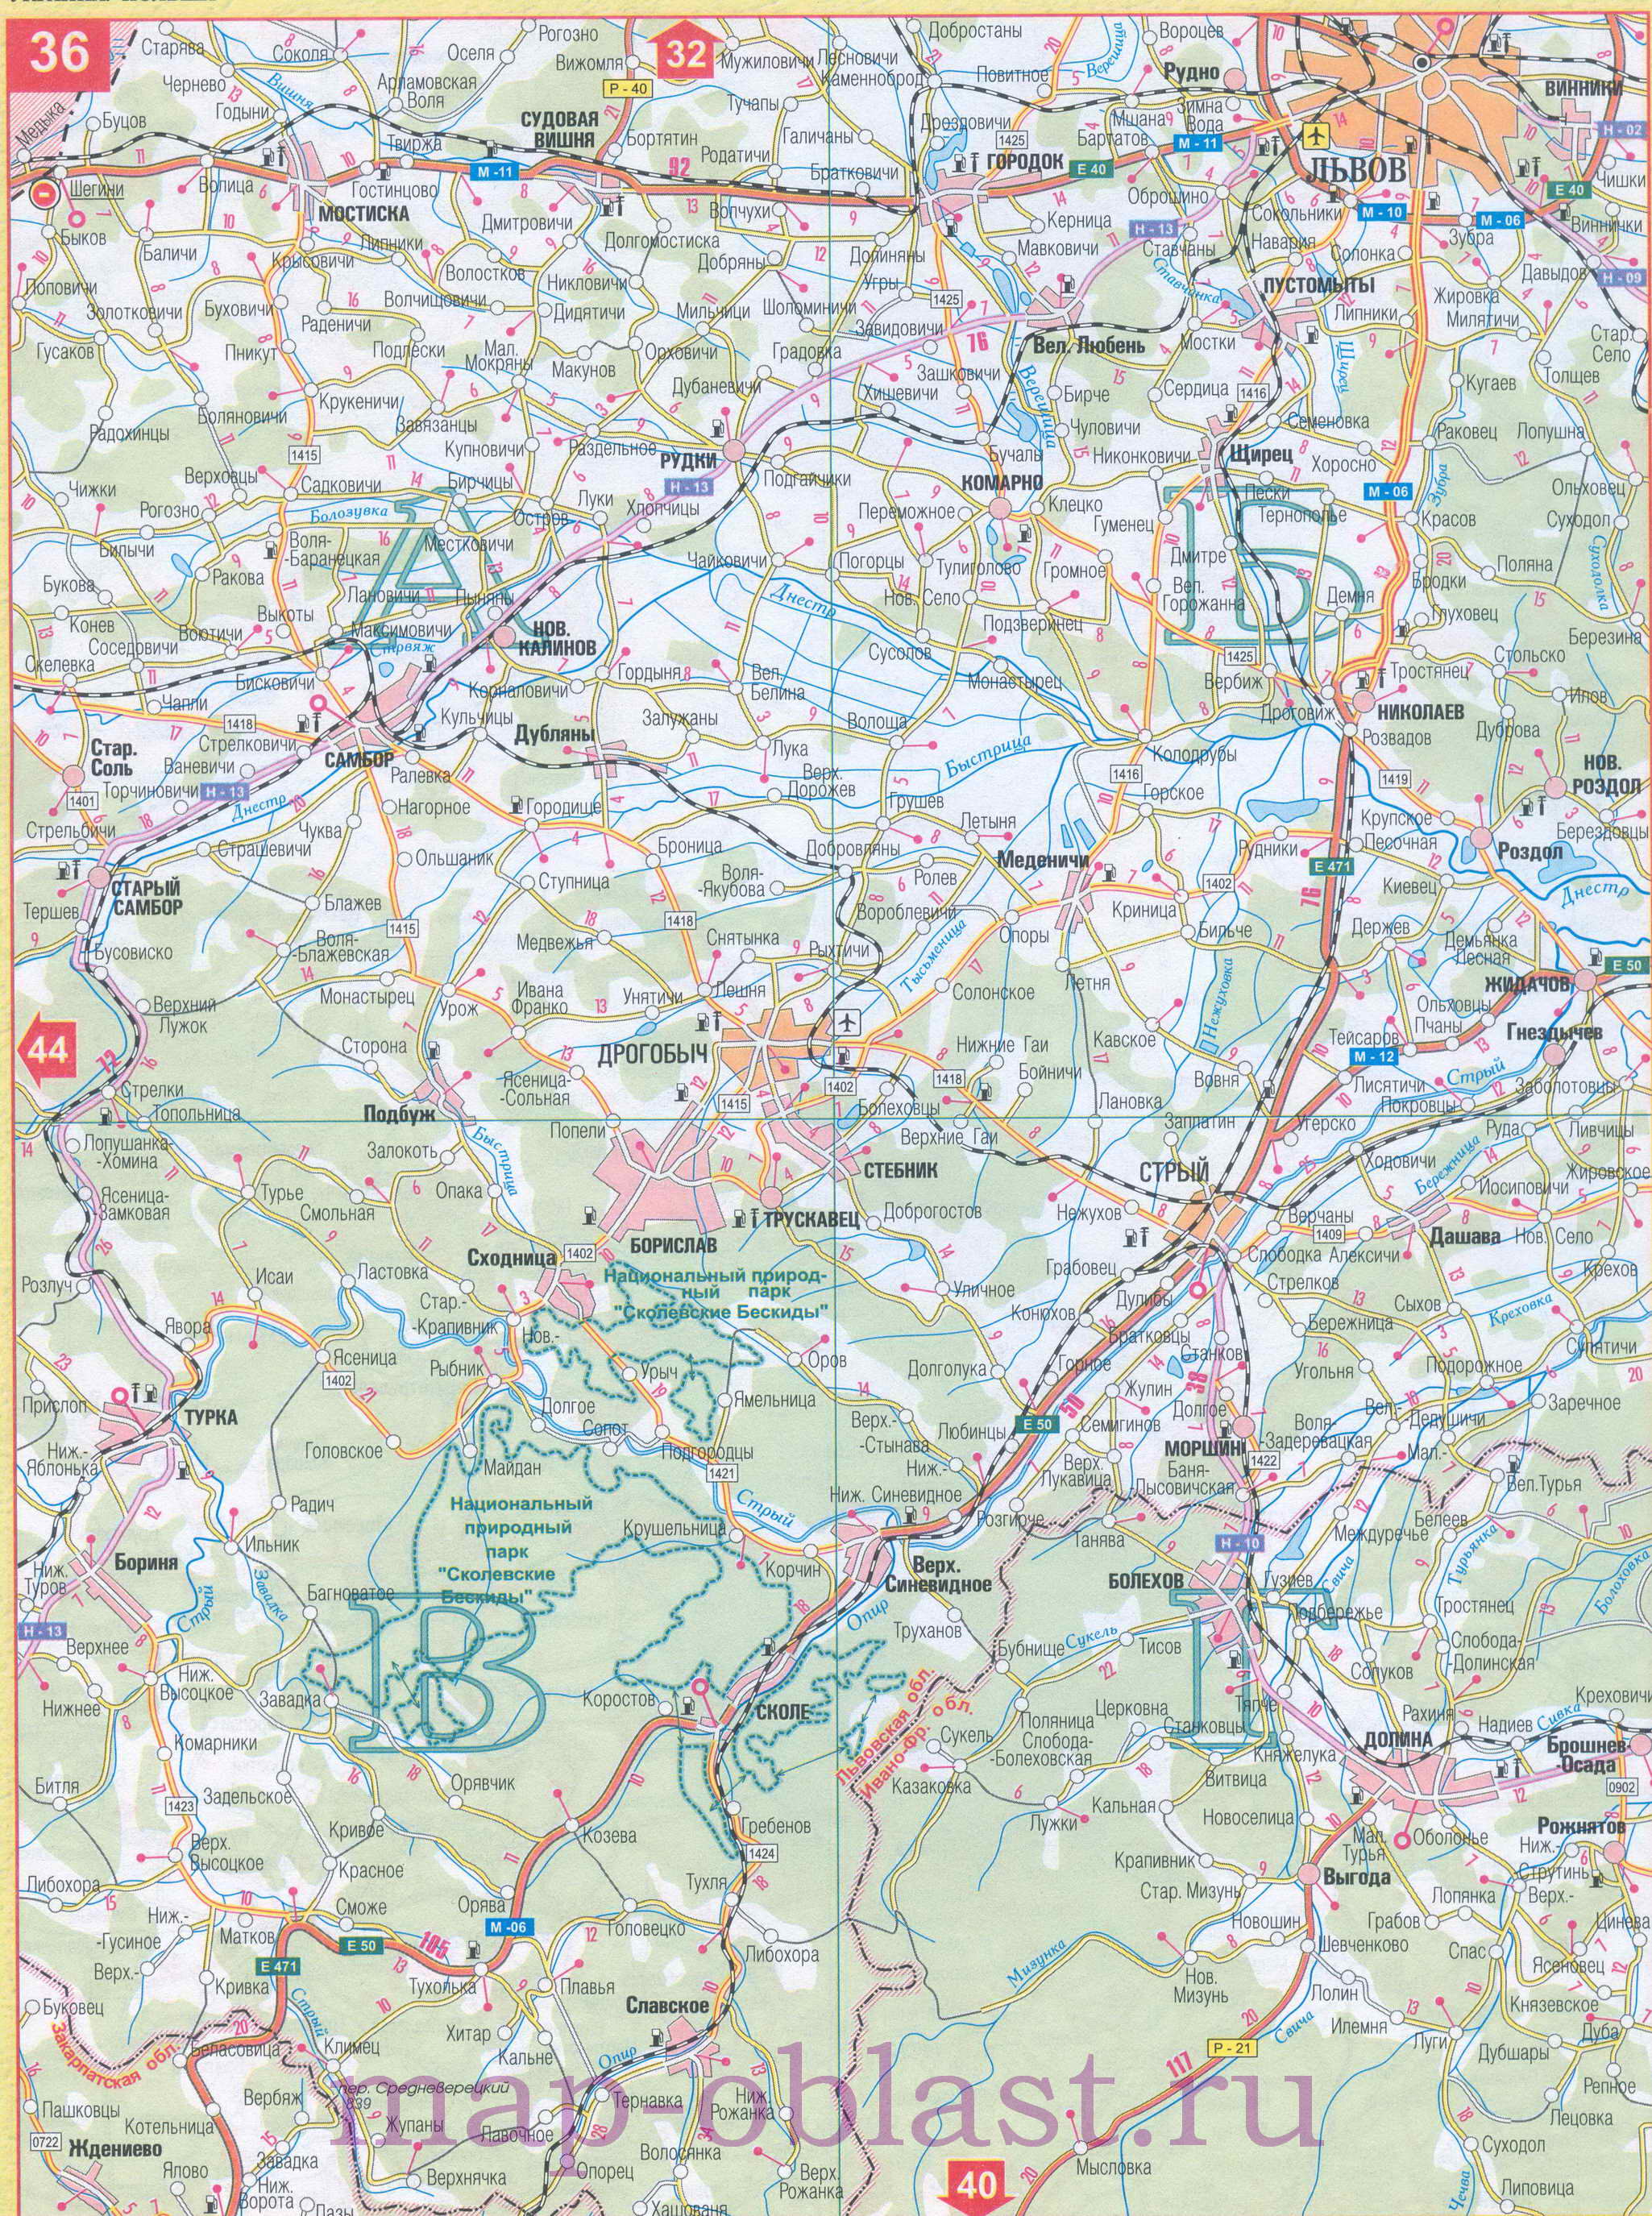 Карта дорог запада Украины - Закарпатская область. Подробная автомобильная карта Закарпатской области, B0 - 